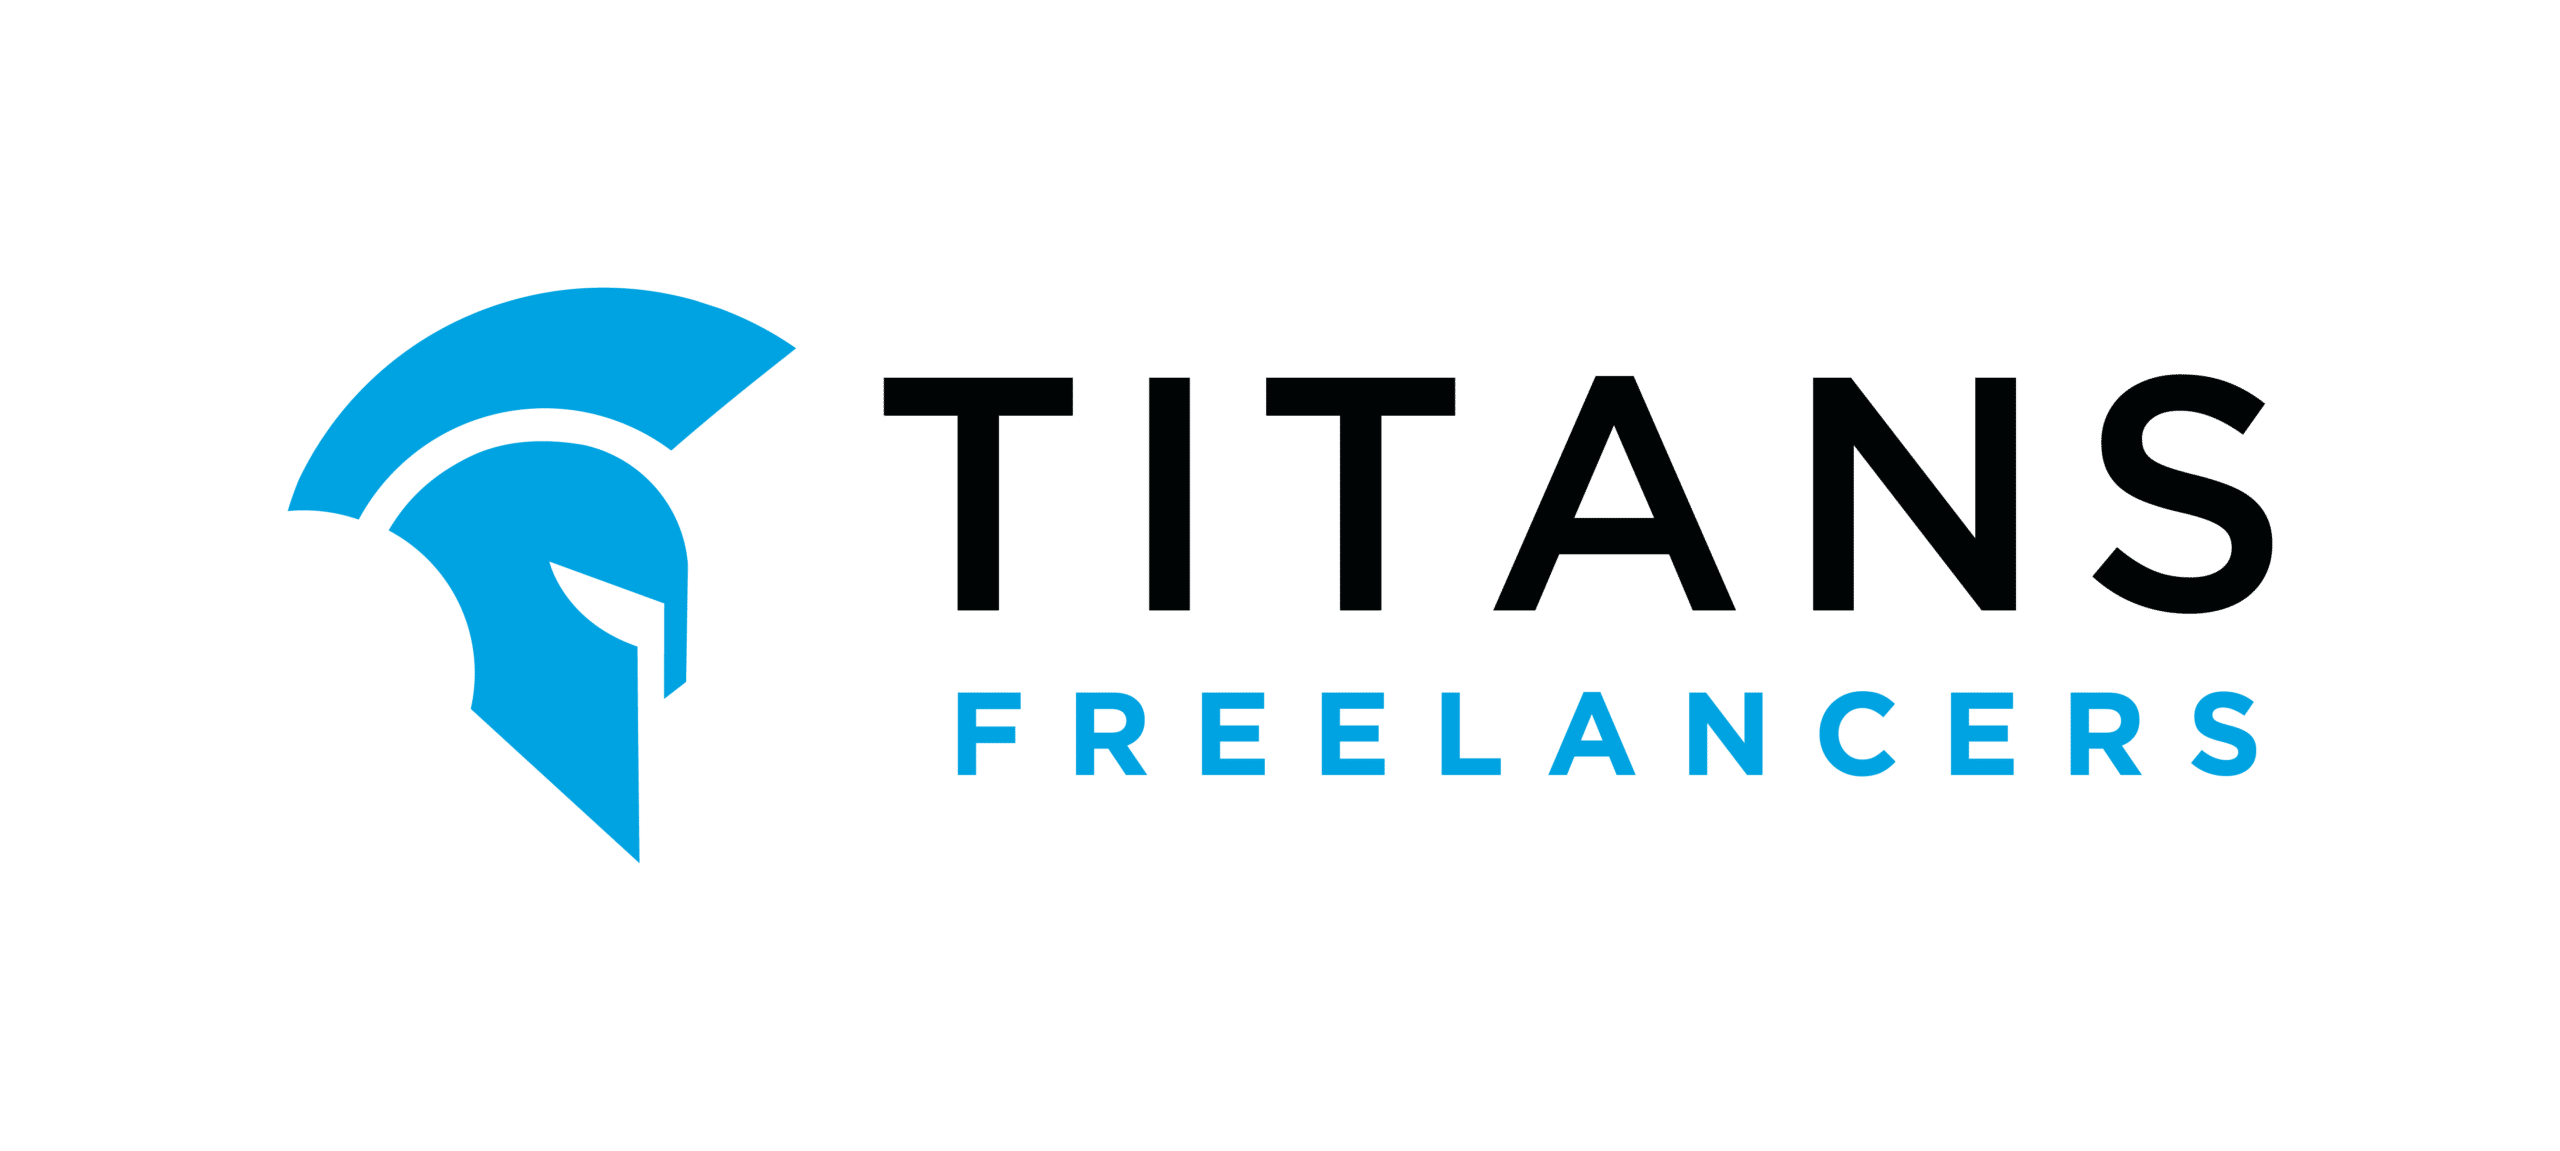 TITANS freelancers logo